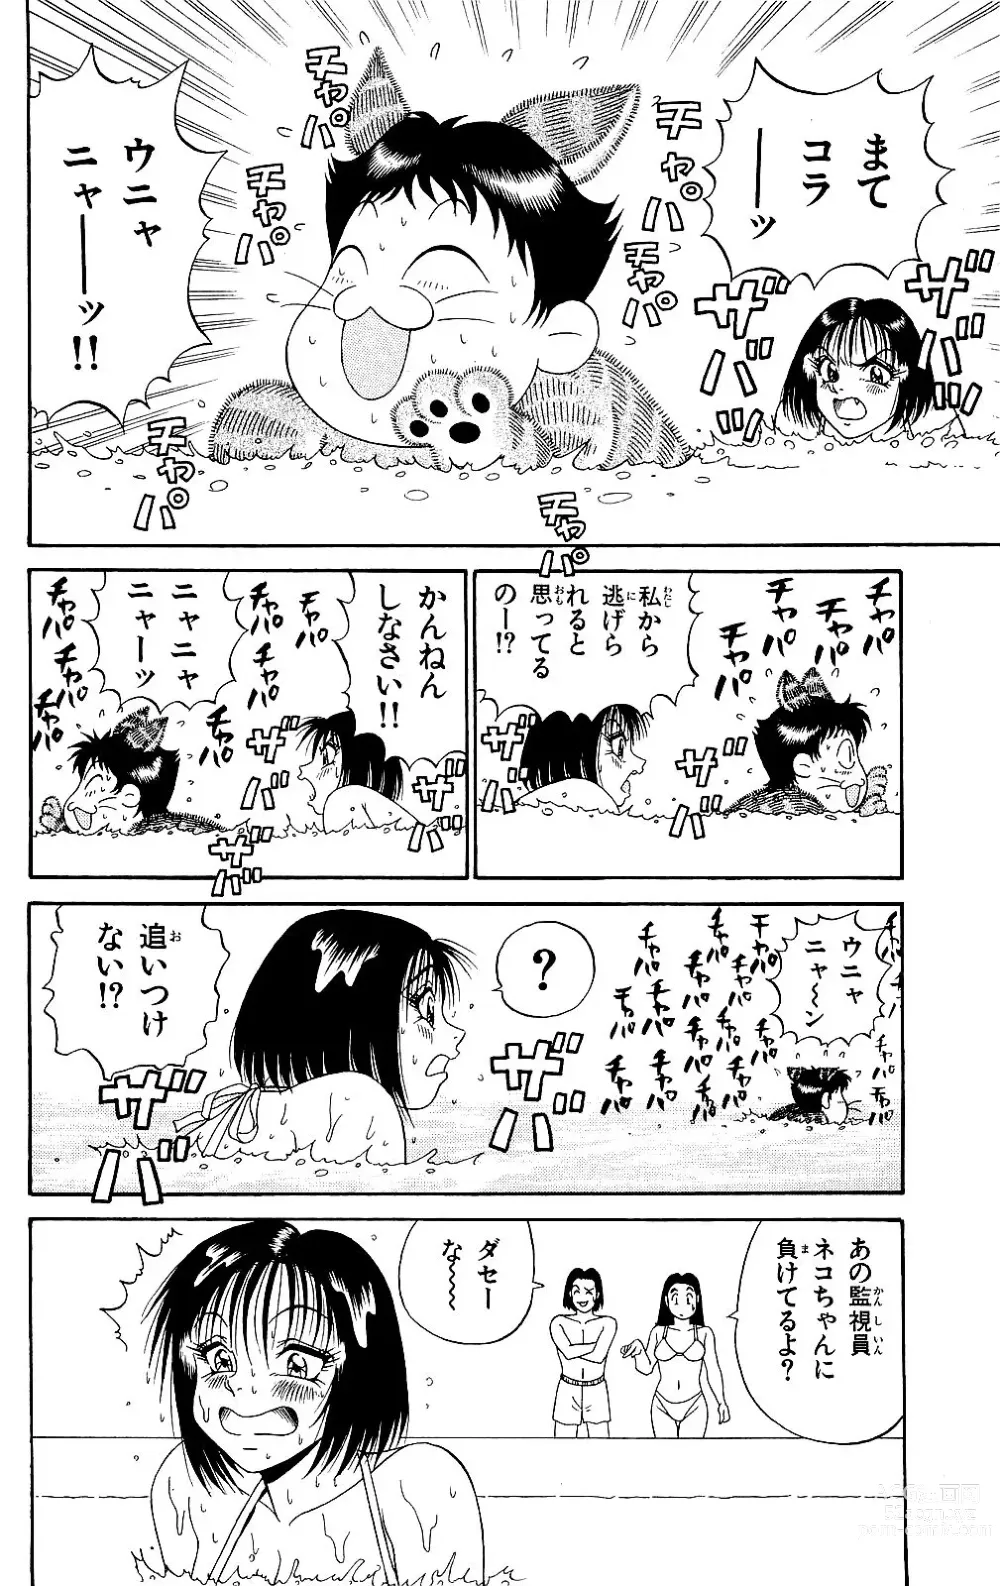 Page 20 of manga Orette Piyoritan 06